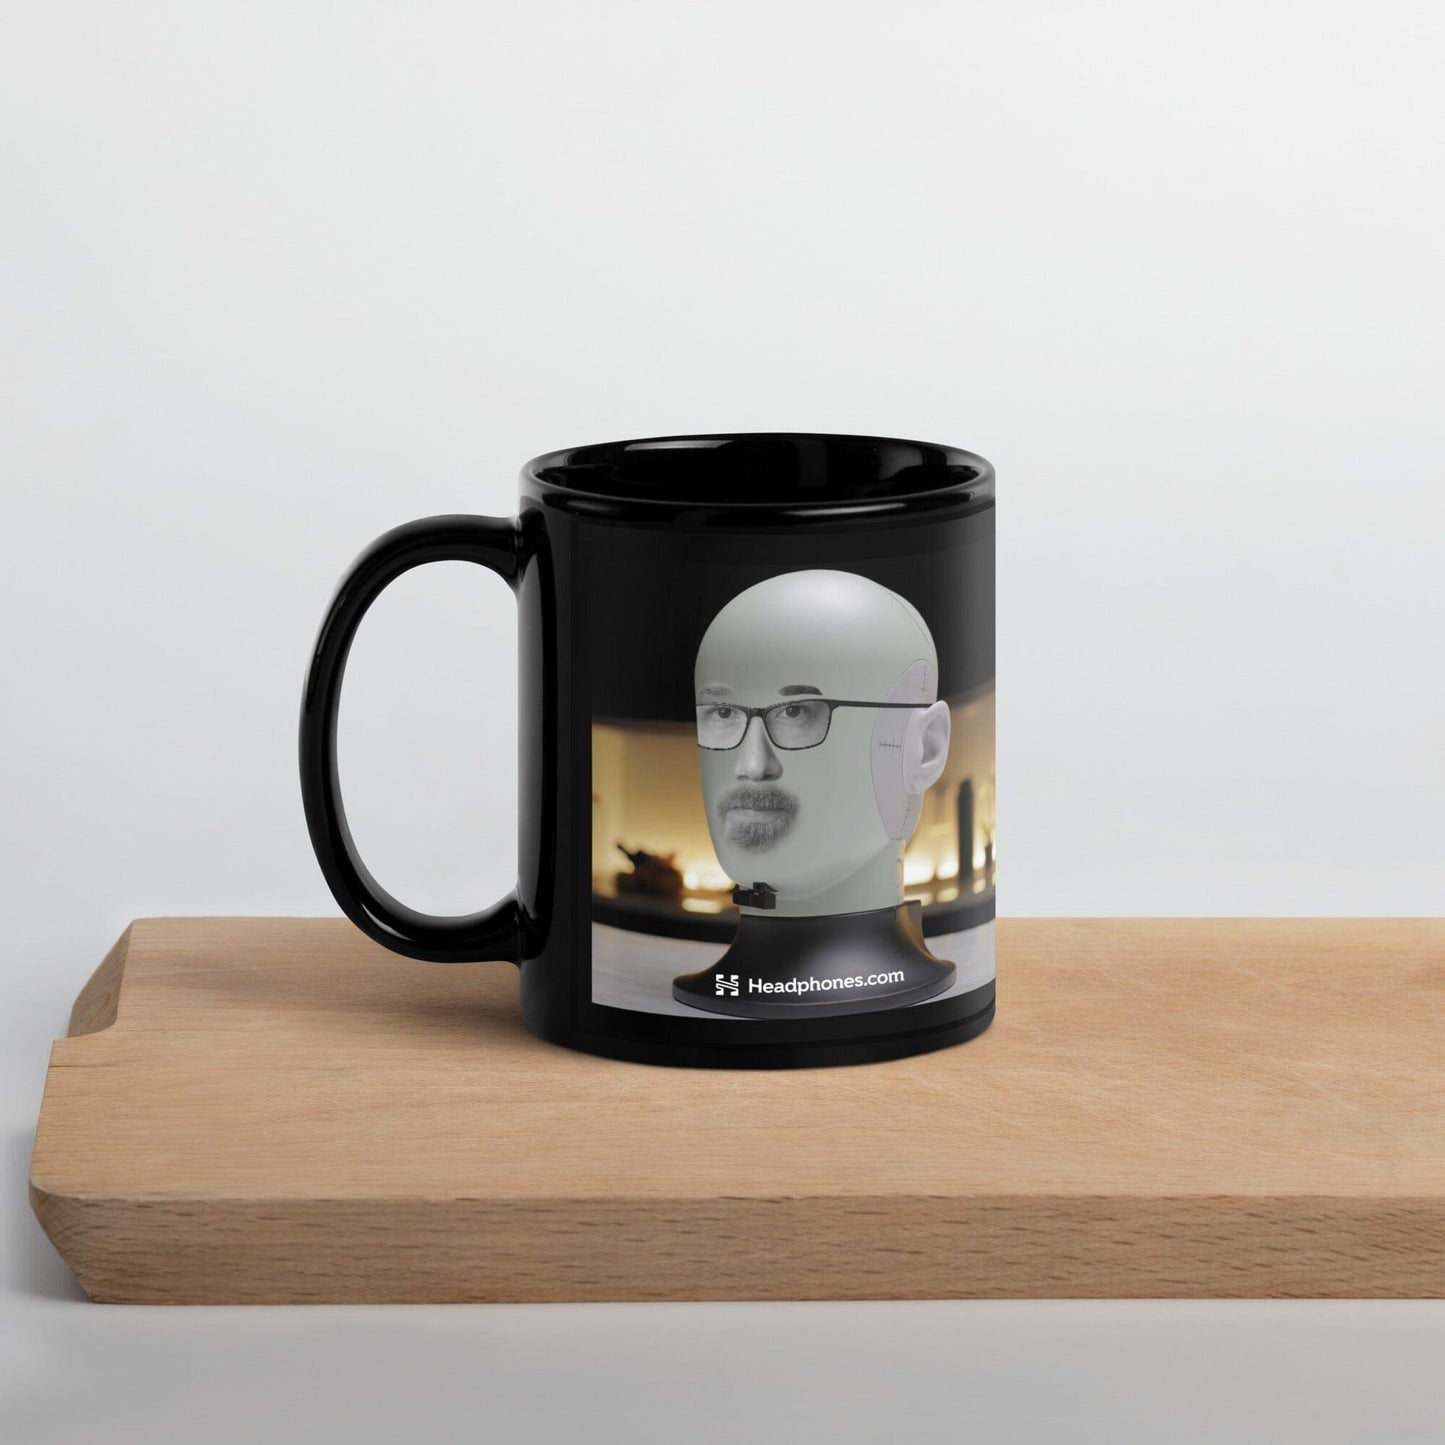 Resolve 5128 Head Morning Coffee Mug Mugs Headphones.com 